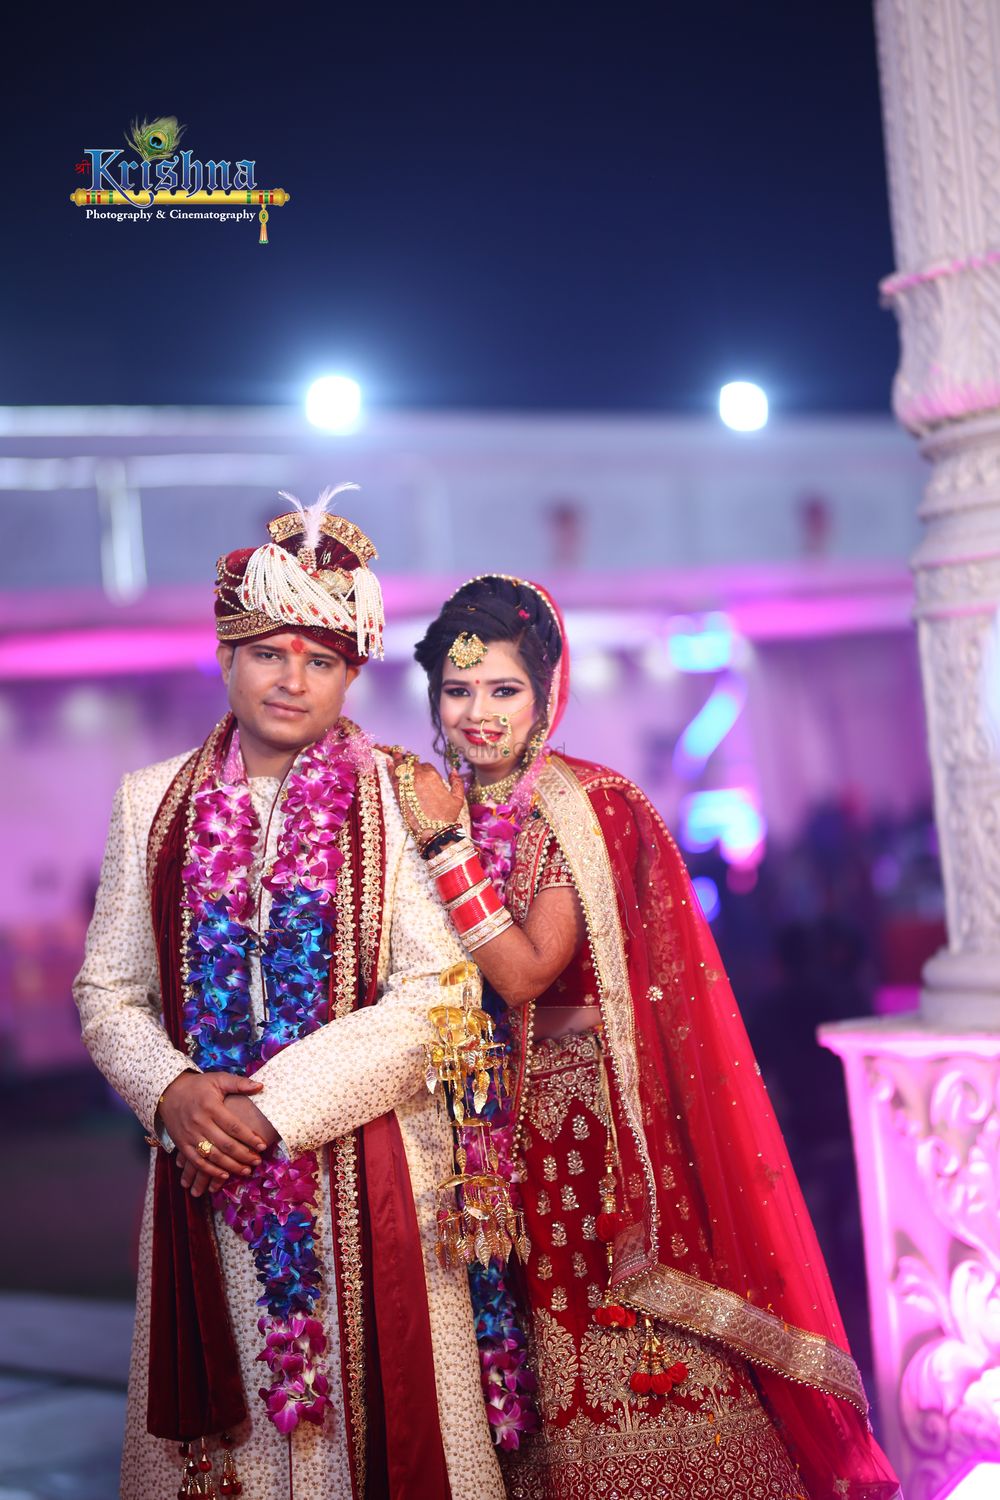 Photo From wedding galley - By Shri Krishna Photography